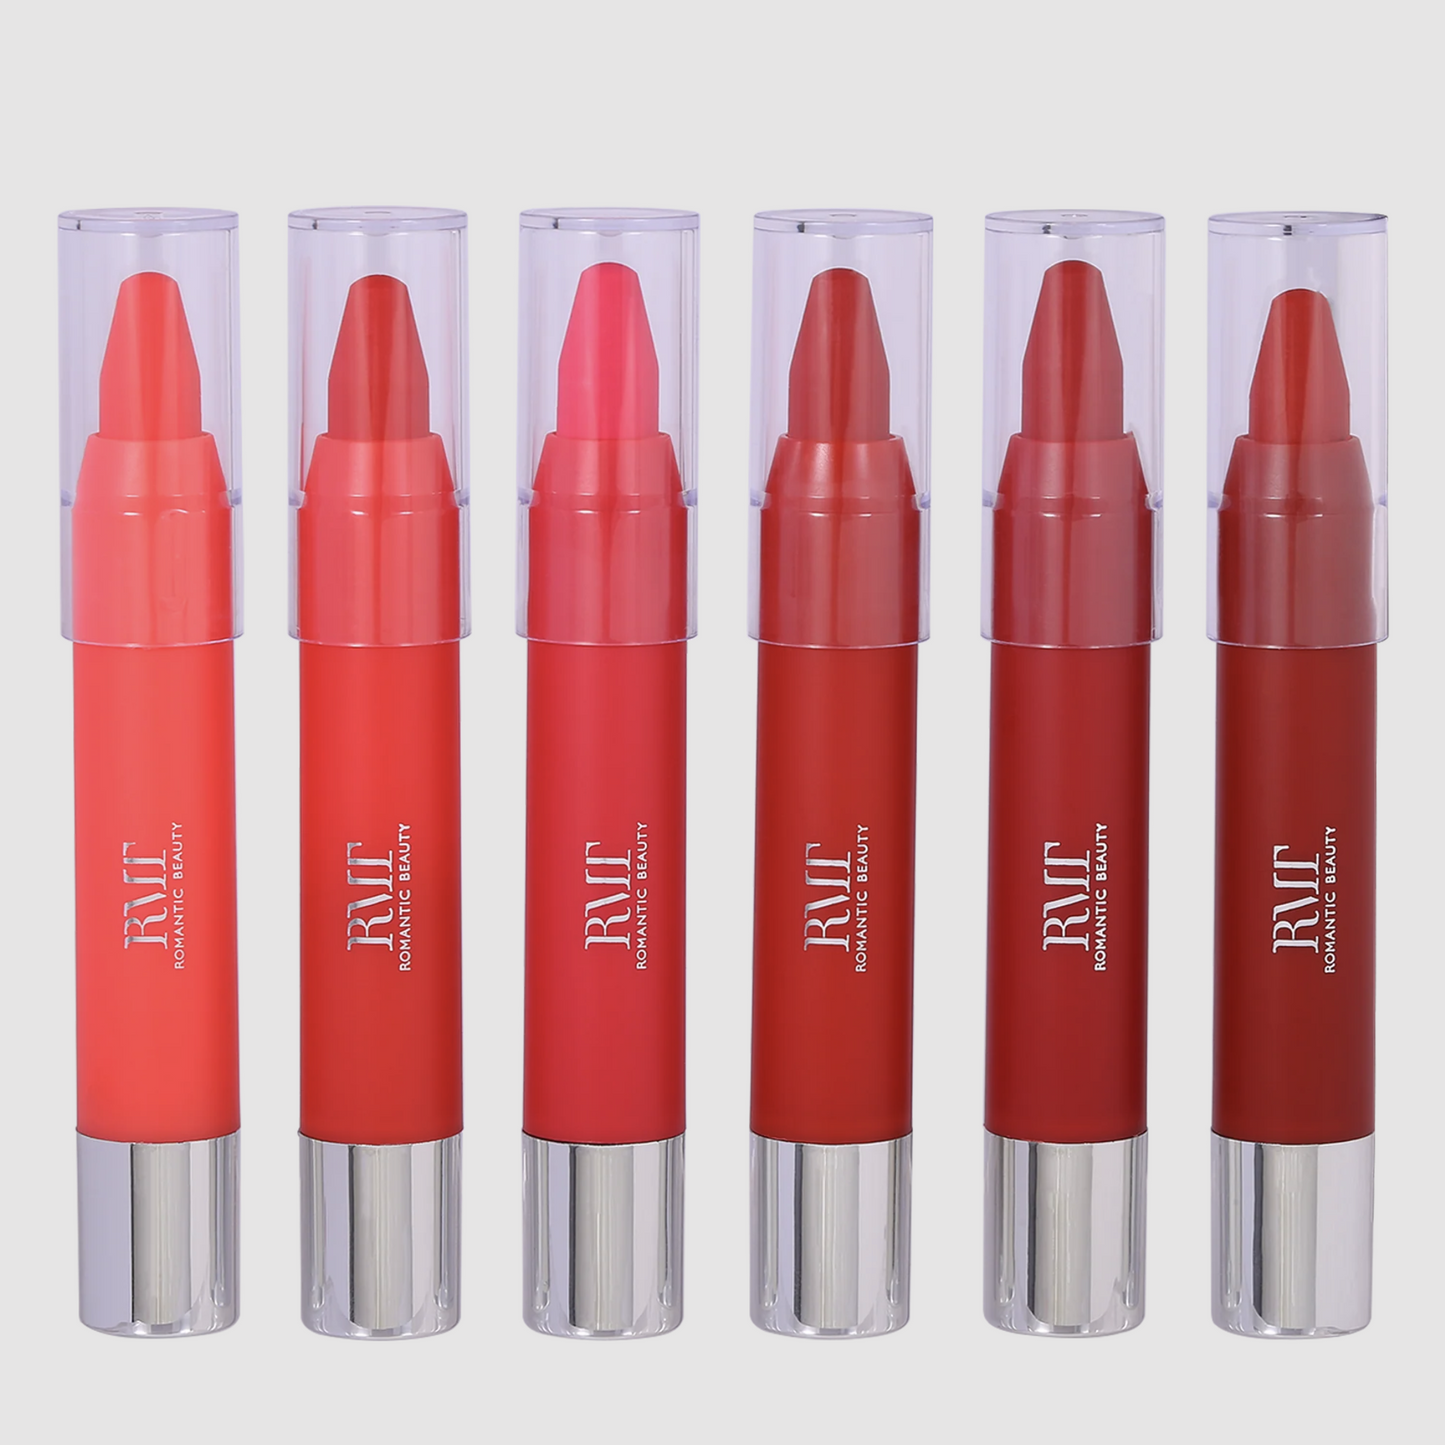 Crayon Lipstick Red #3